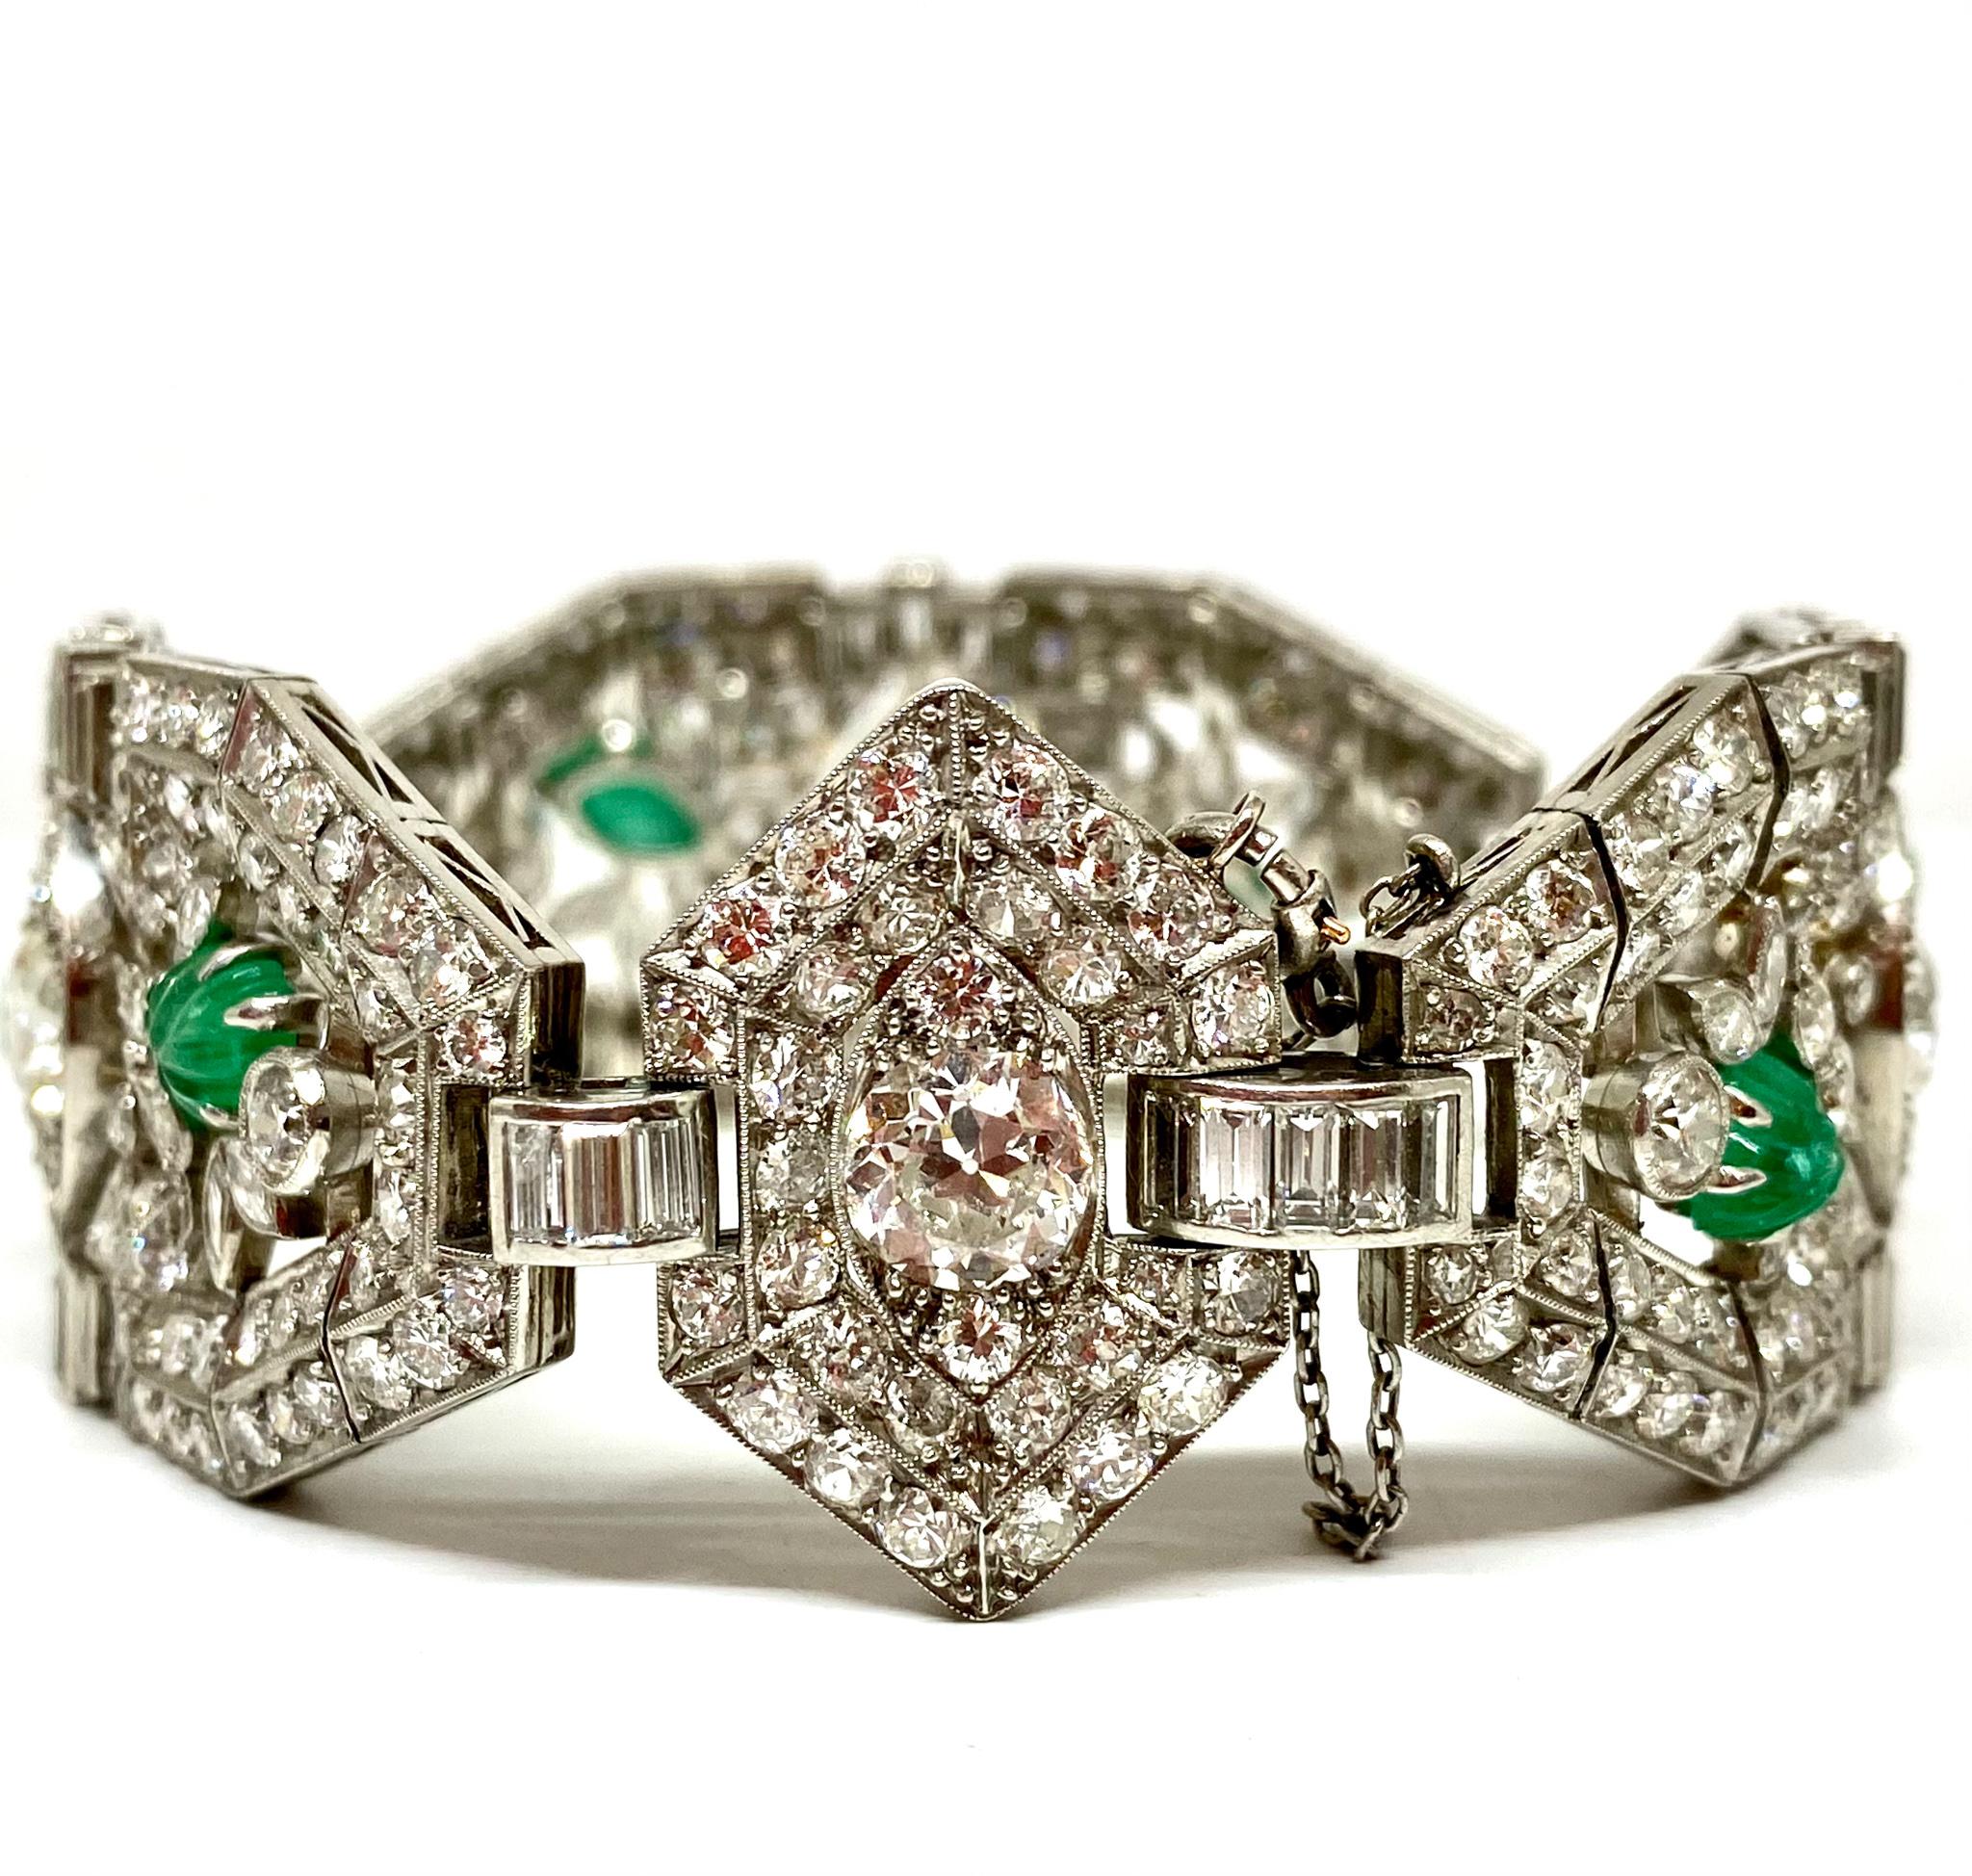 Edwardian 28.5 Carat Diamond and Emerald Antique Estate Bracelet For Sale